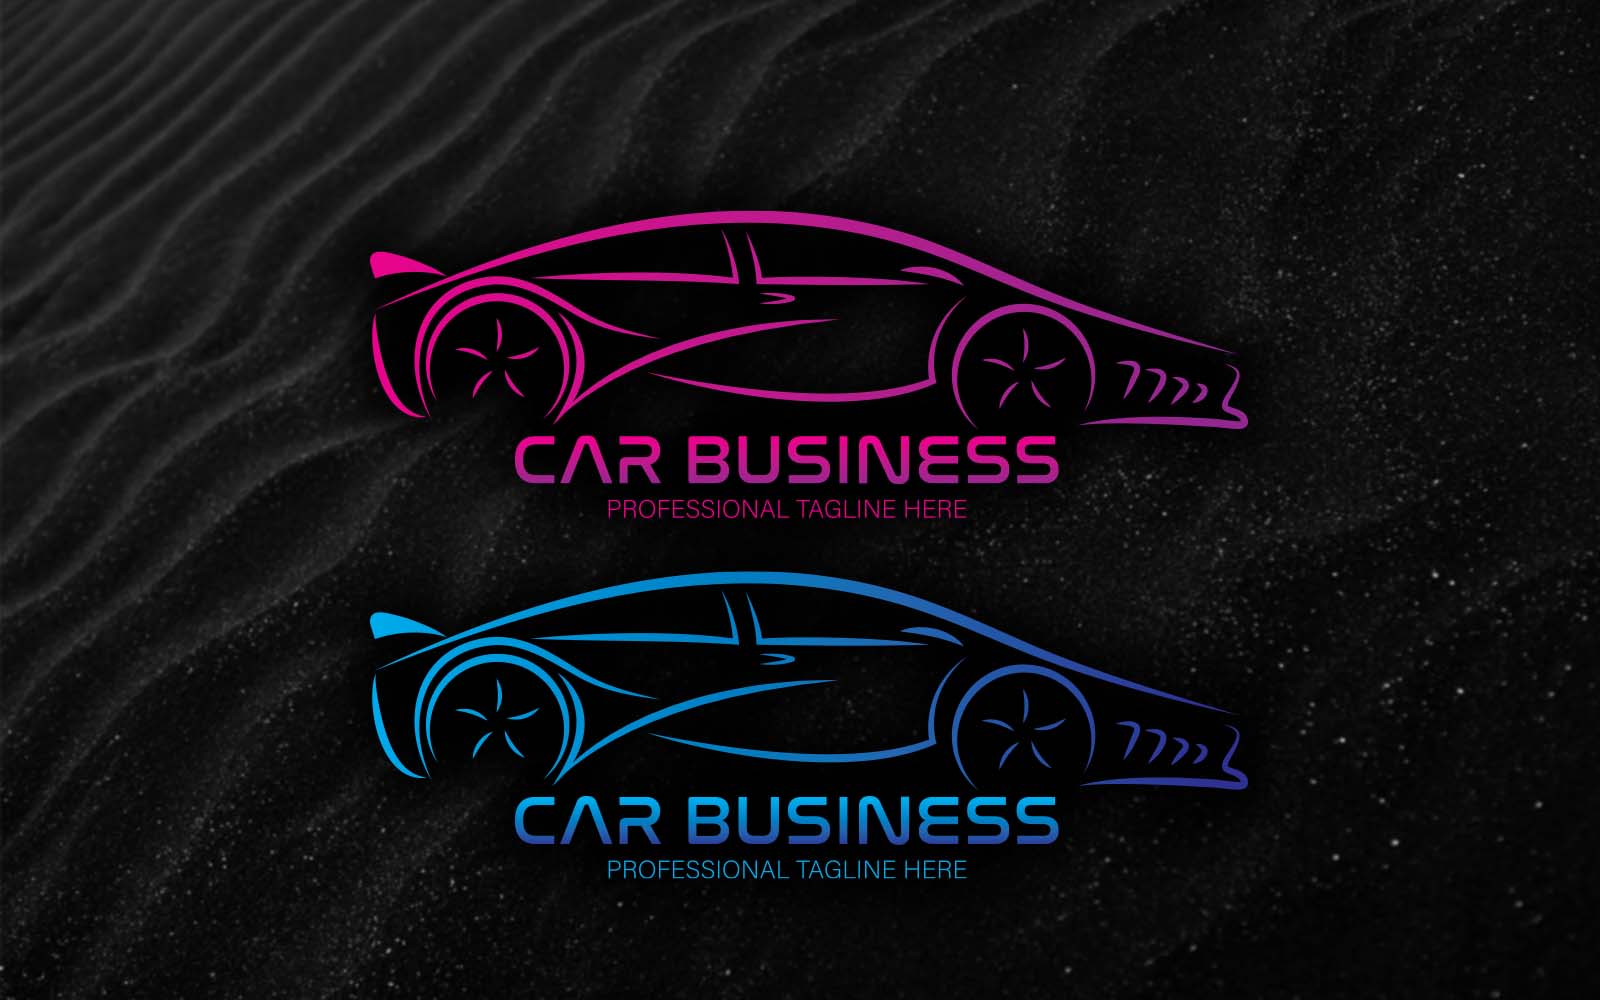 Template #296989 Car Business Webdesign Template - Logo template Preview